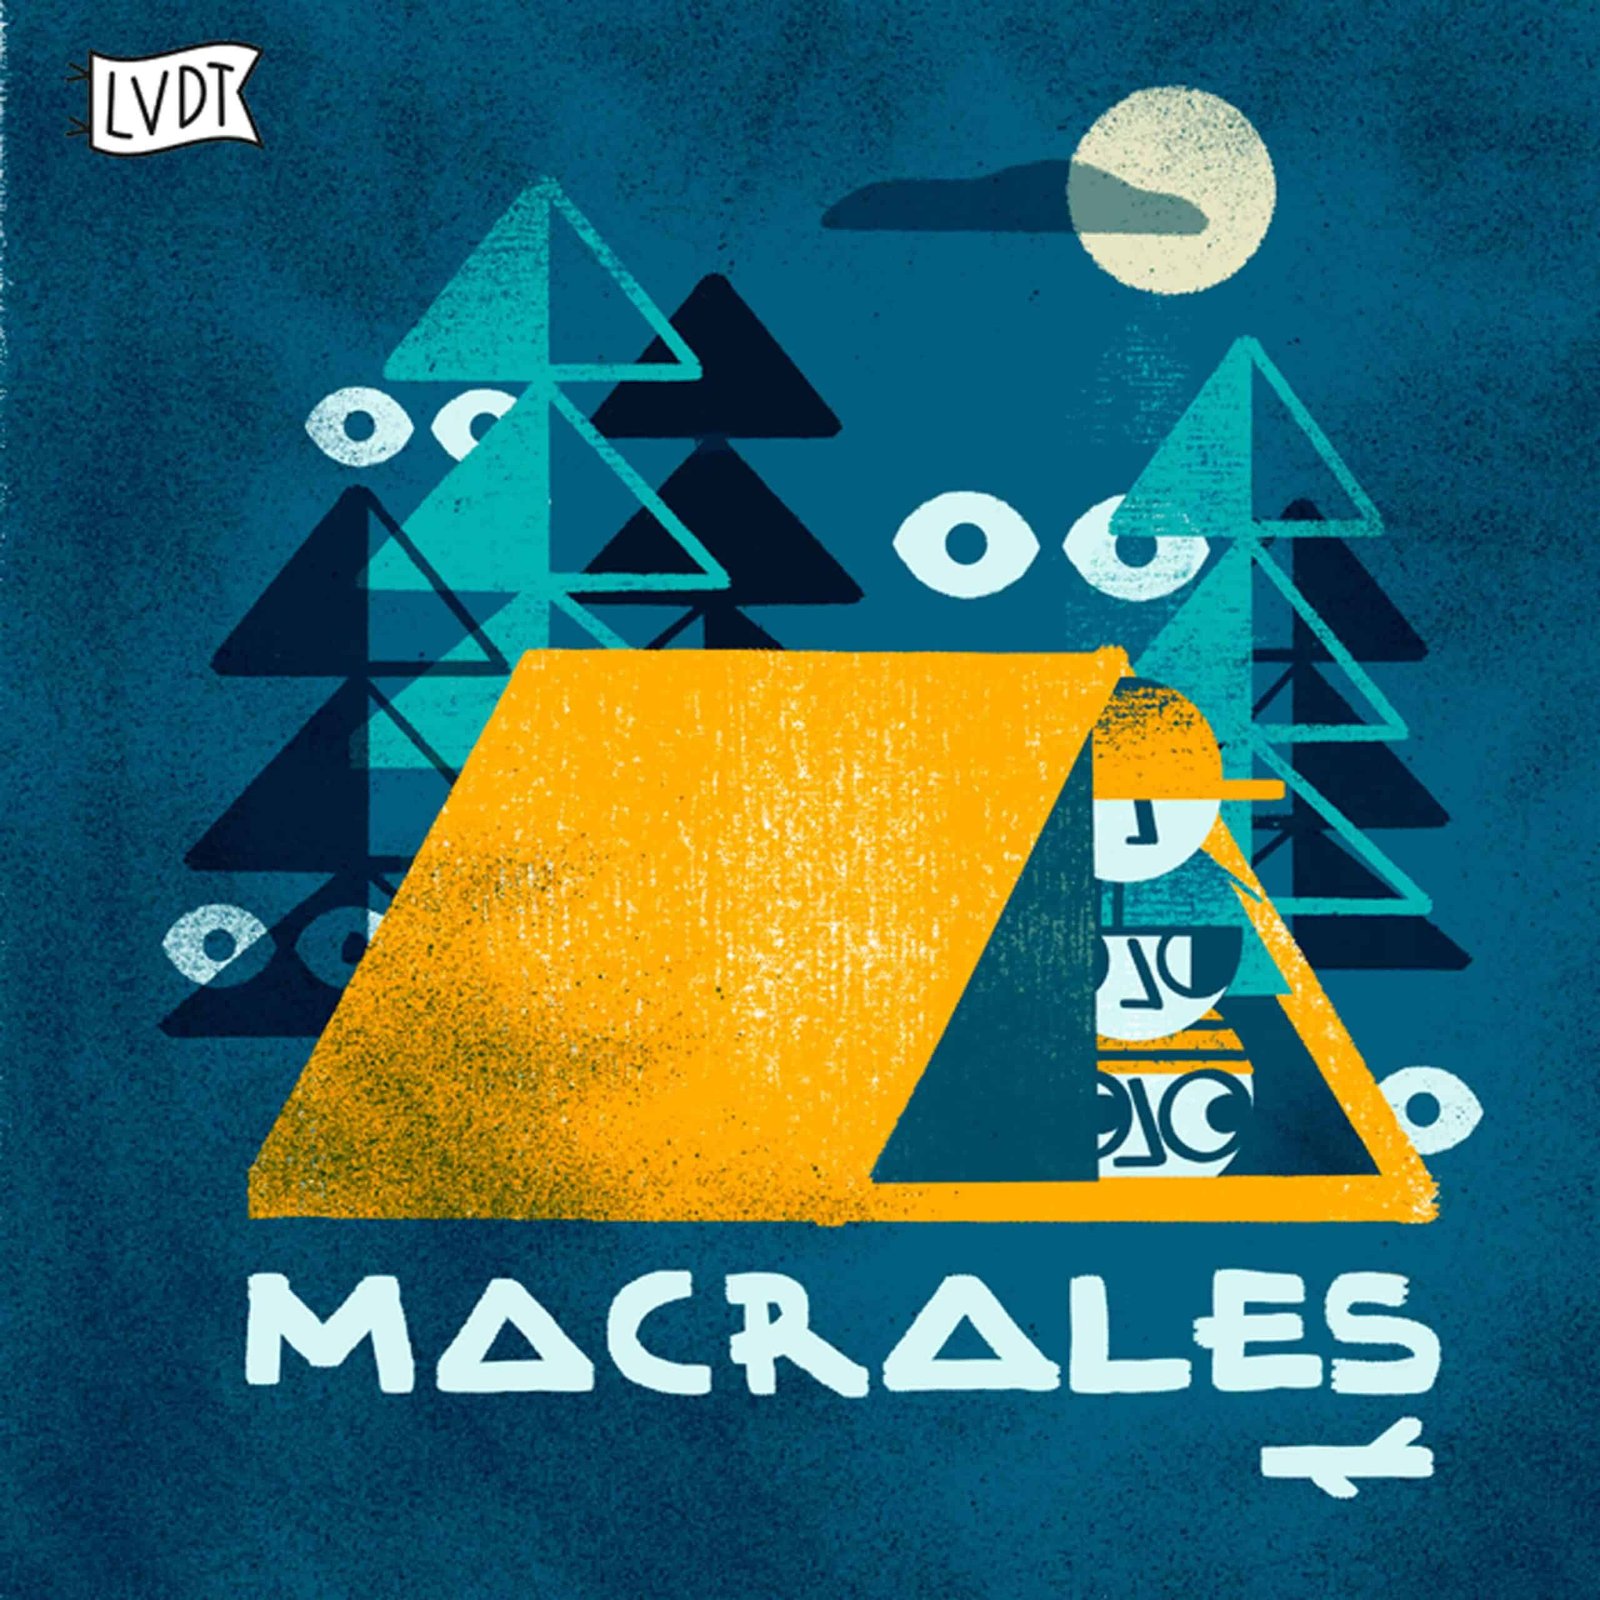 Macrales_W logo